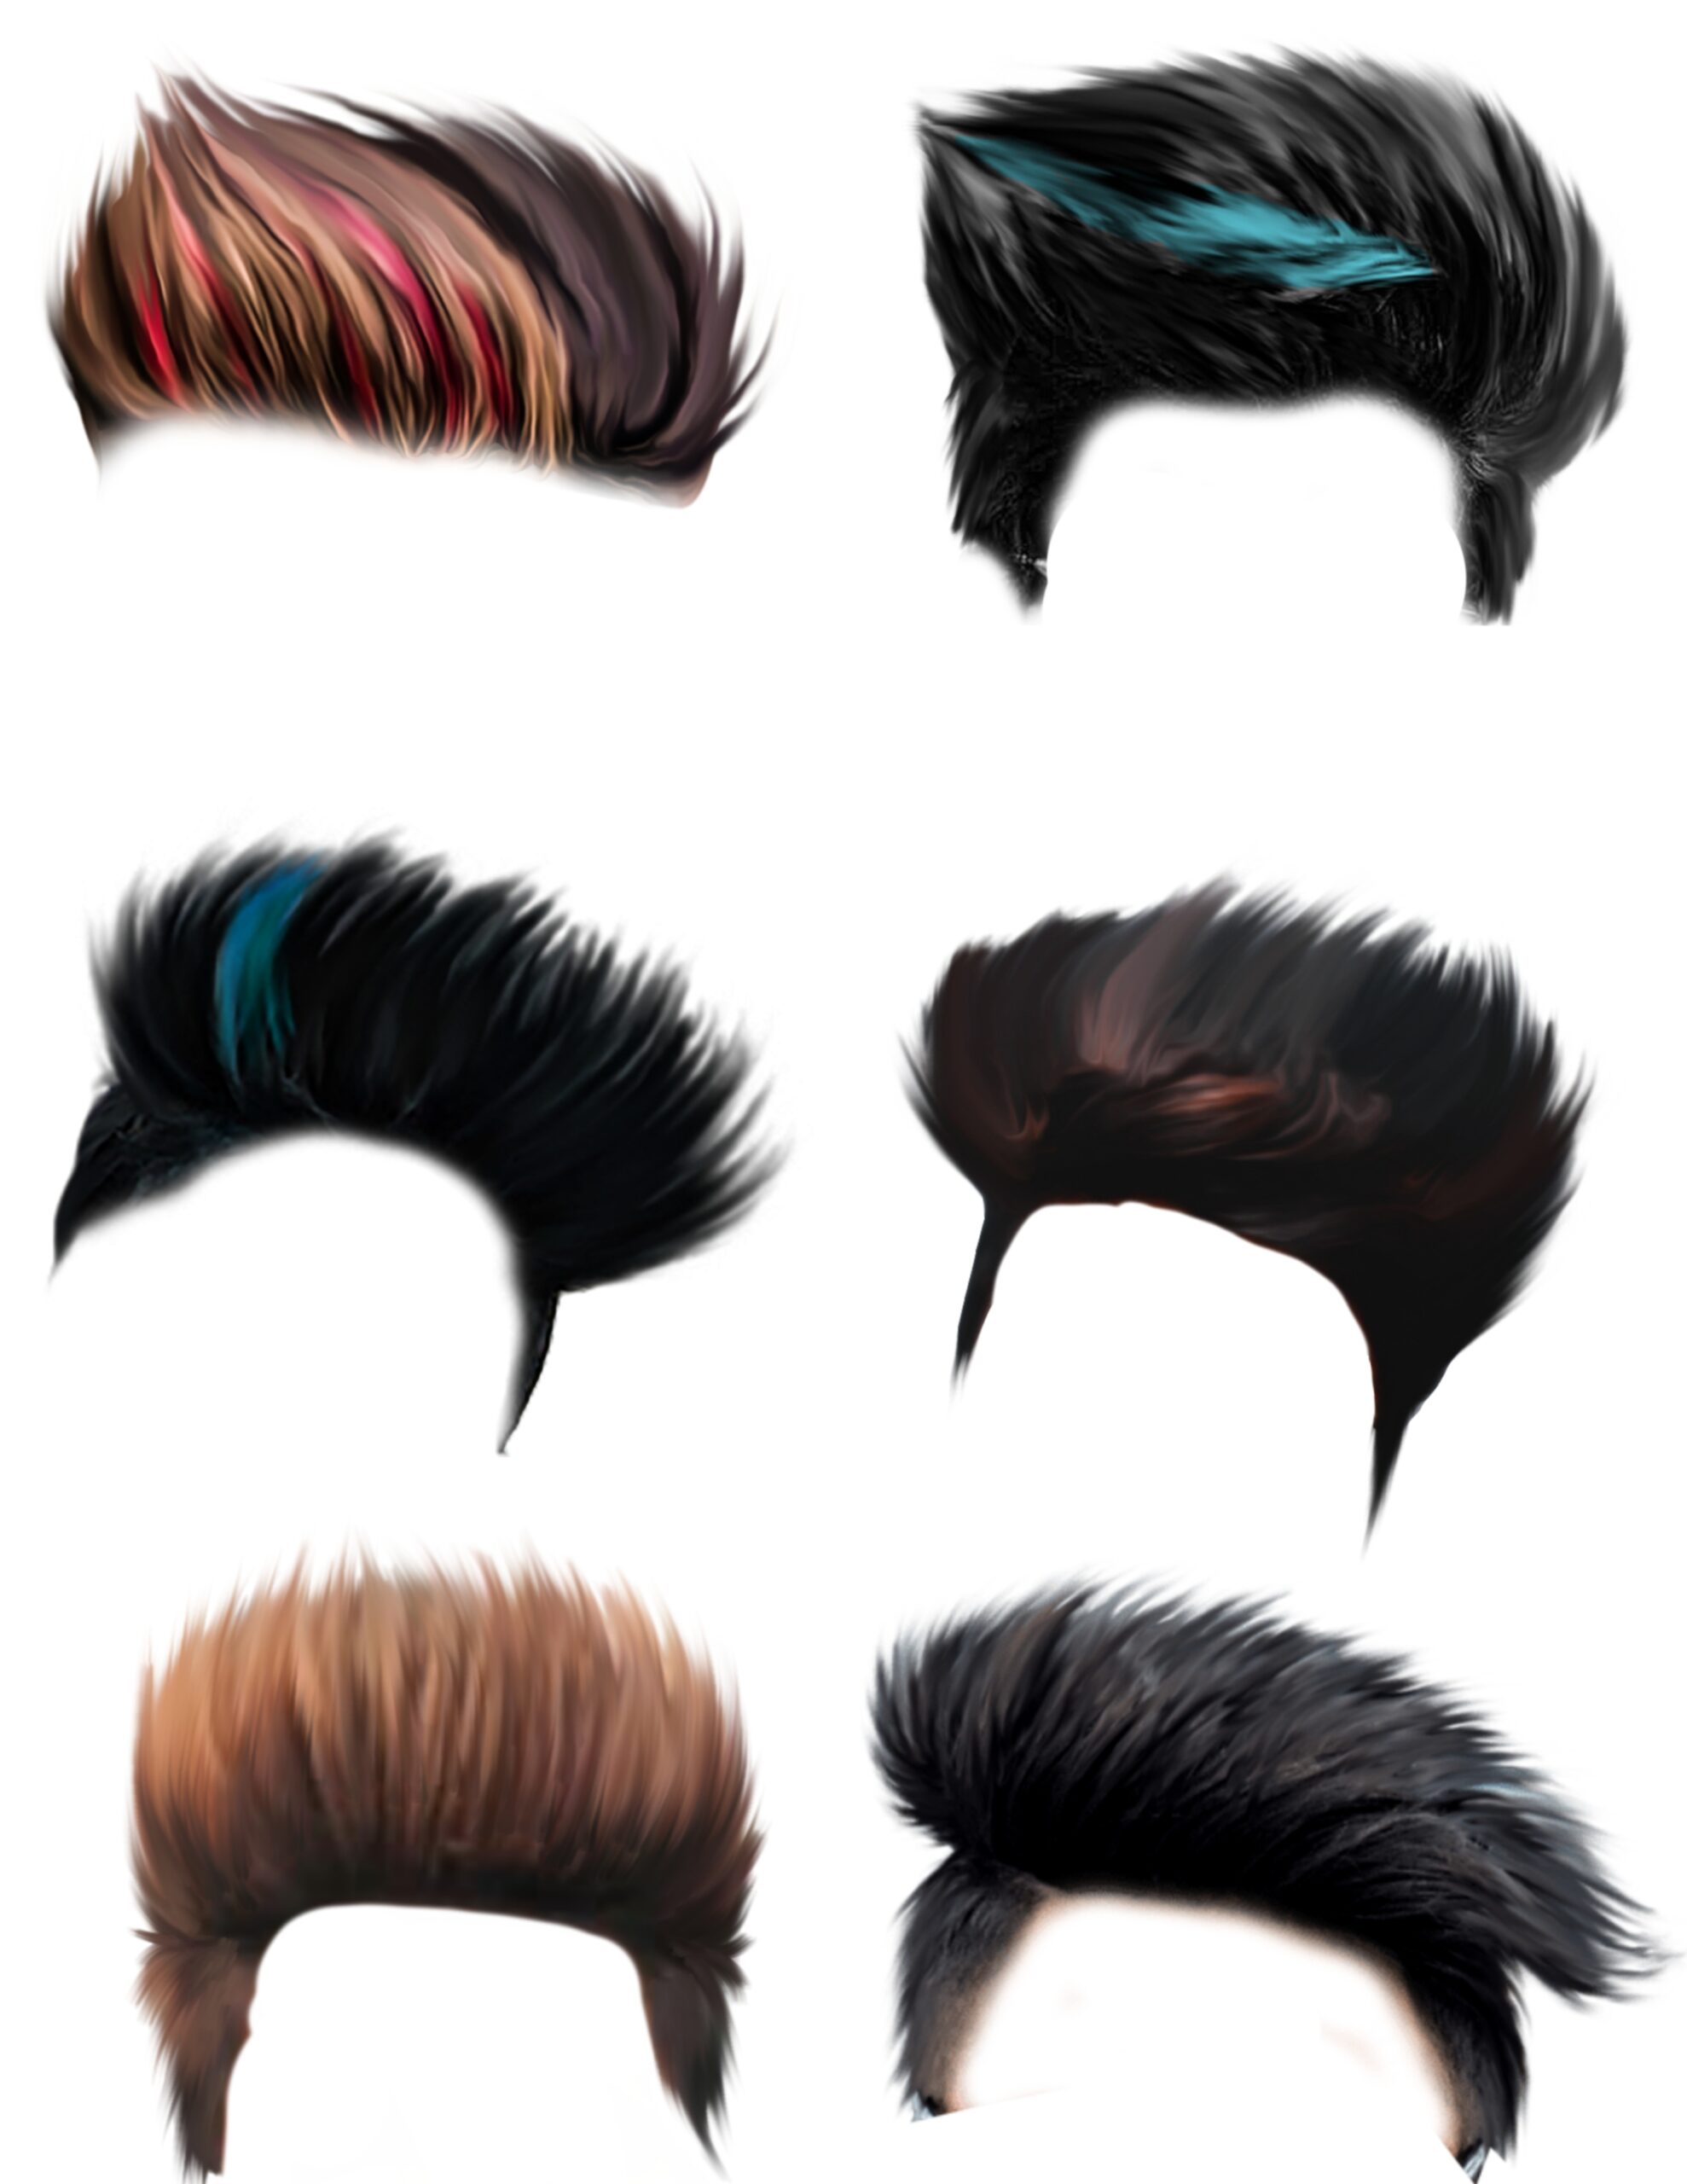 Stylish haircut art Vectors & Illustrations for Free Download | Freepik